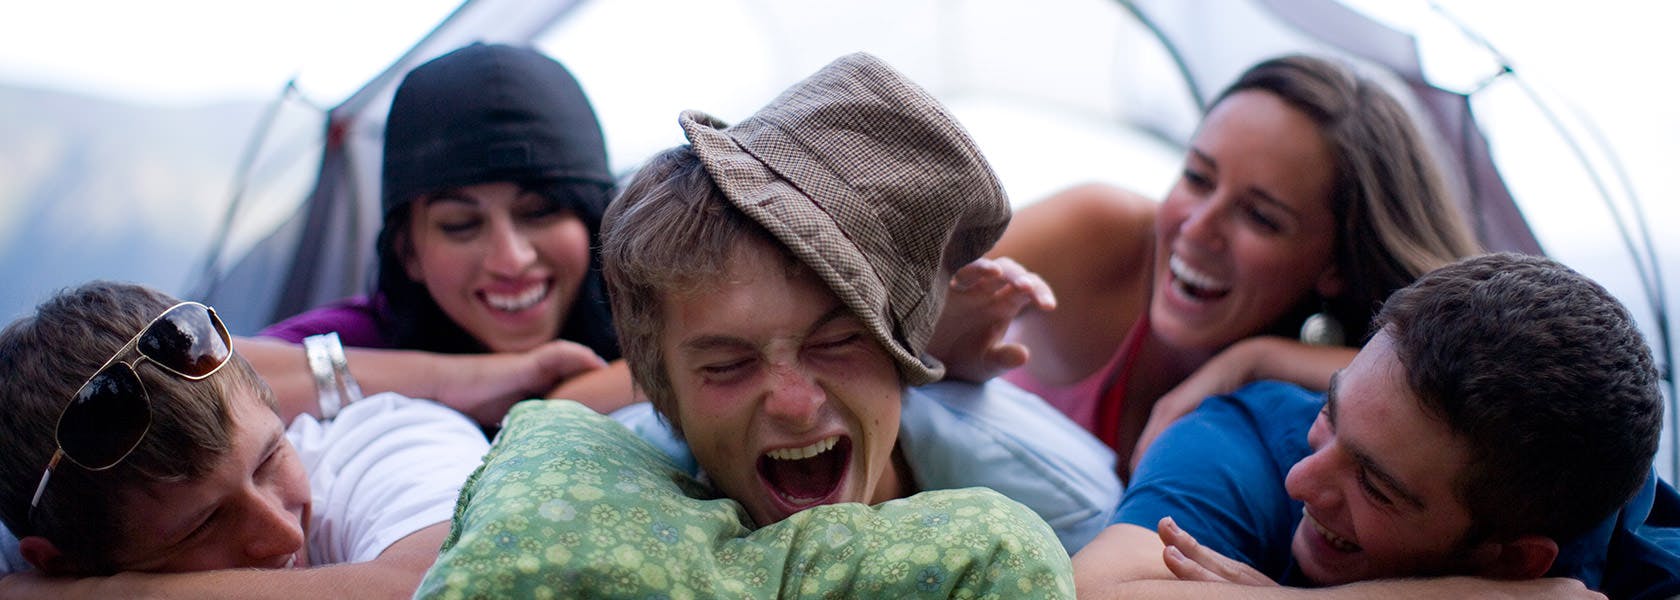 Stressfrie unge mennesker ligger sammen i telt og ler 